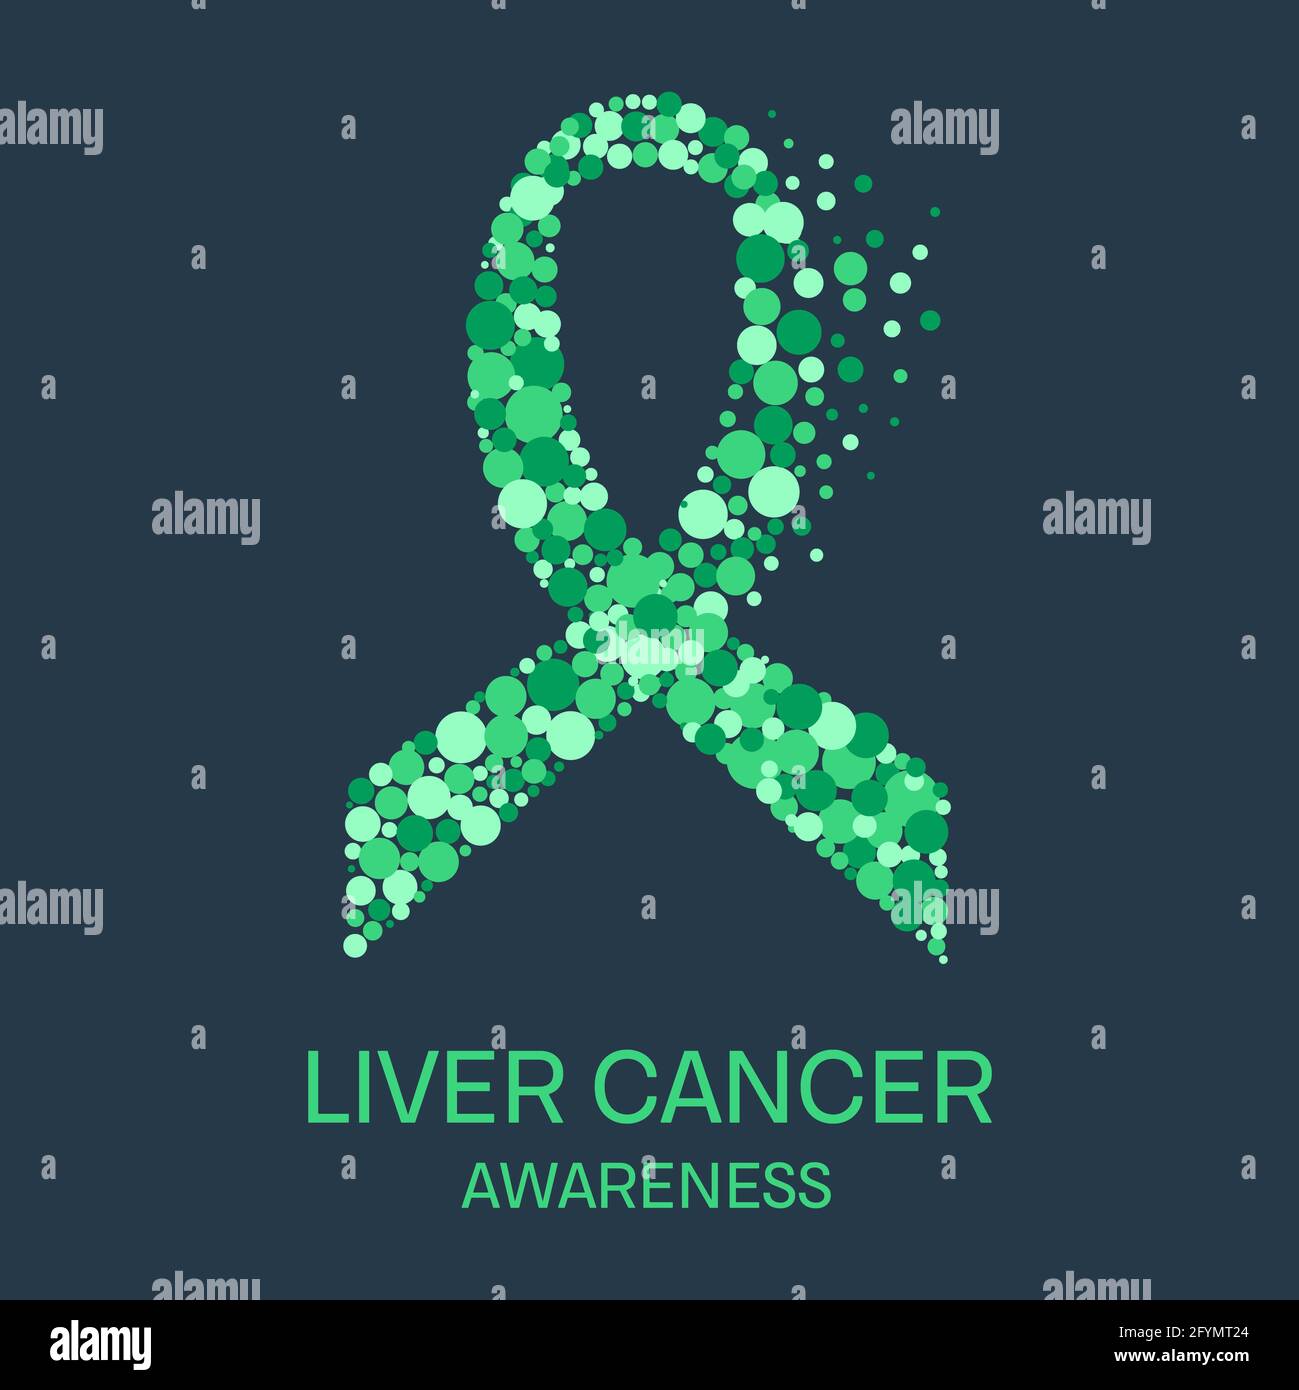 Liver cancer, conceptual illustration Stock Photo